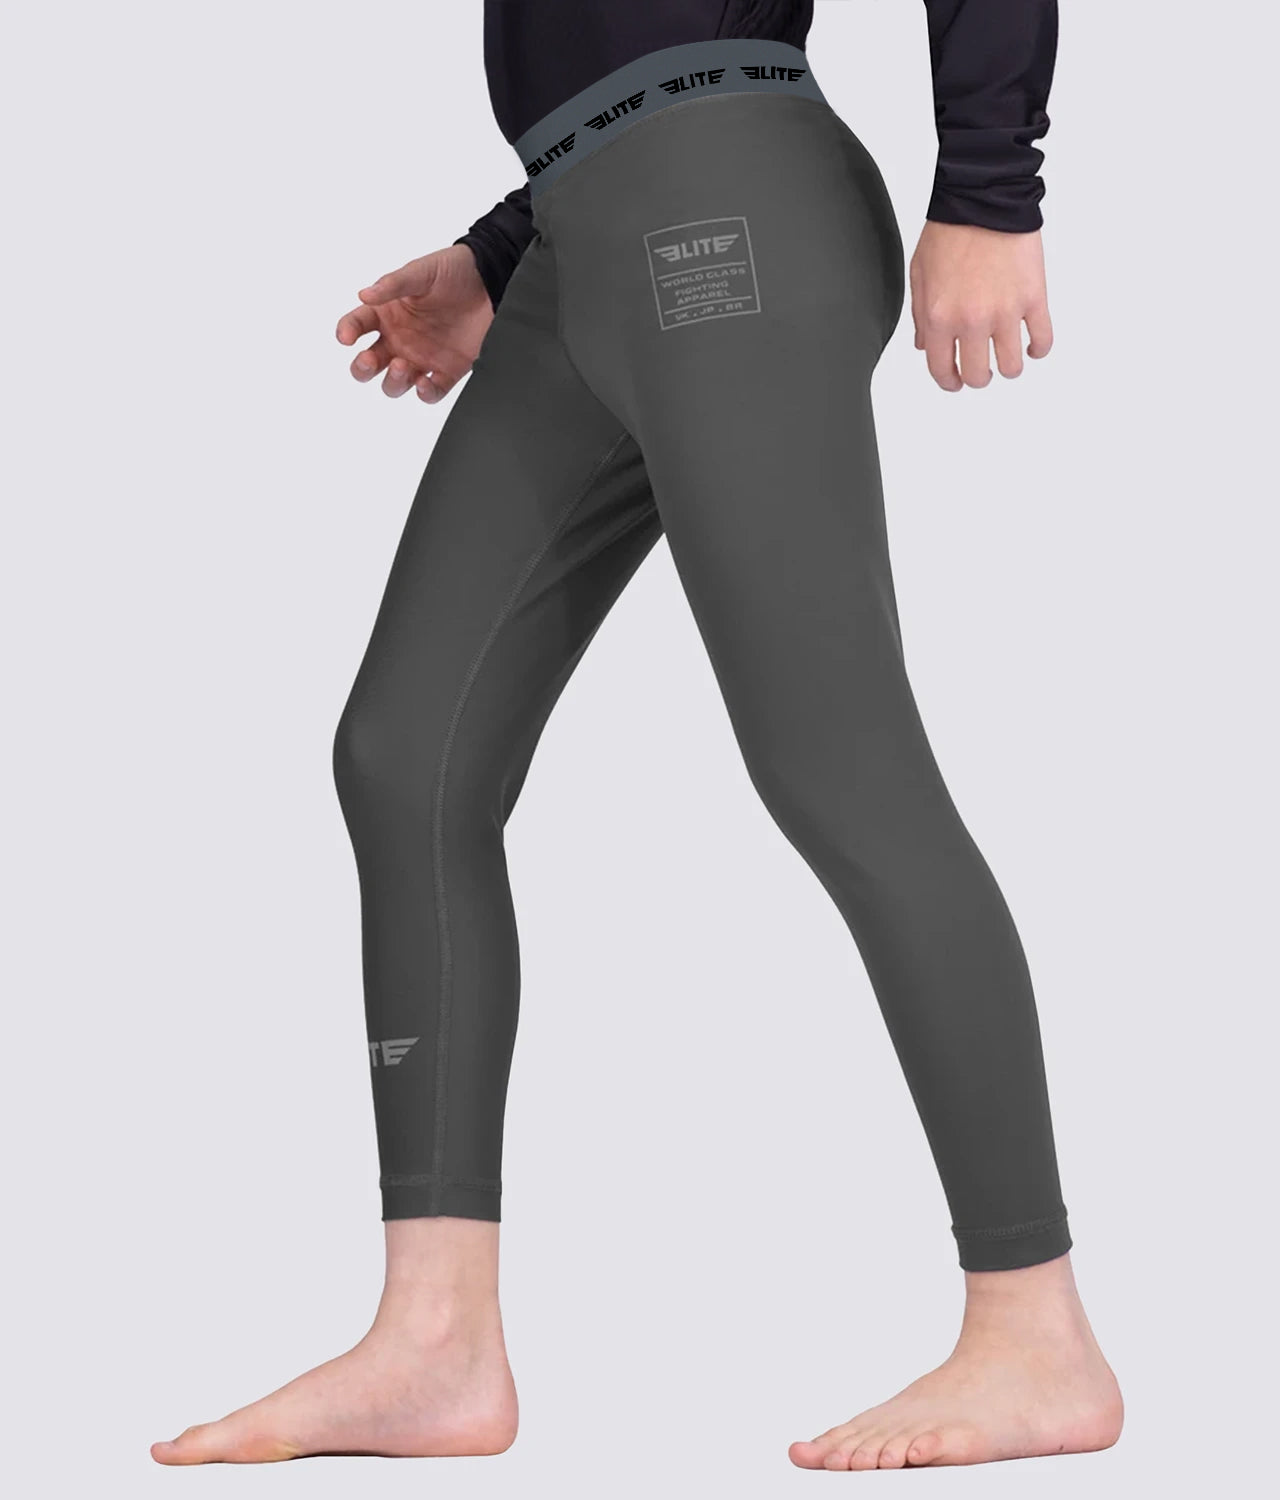 Elite Sports Plain Gray Compression Training Spat Pants